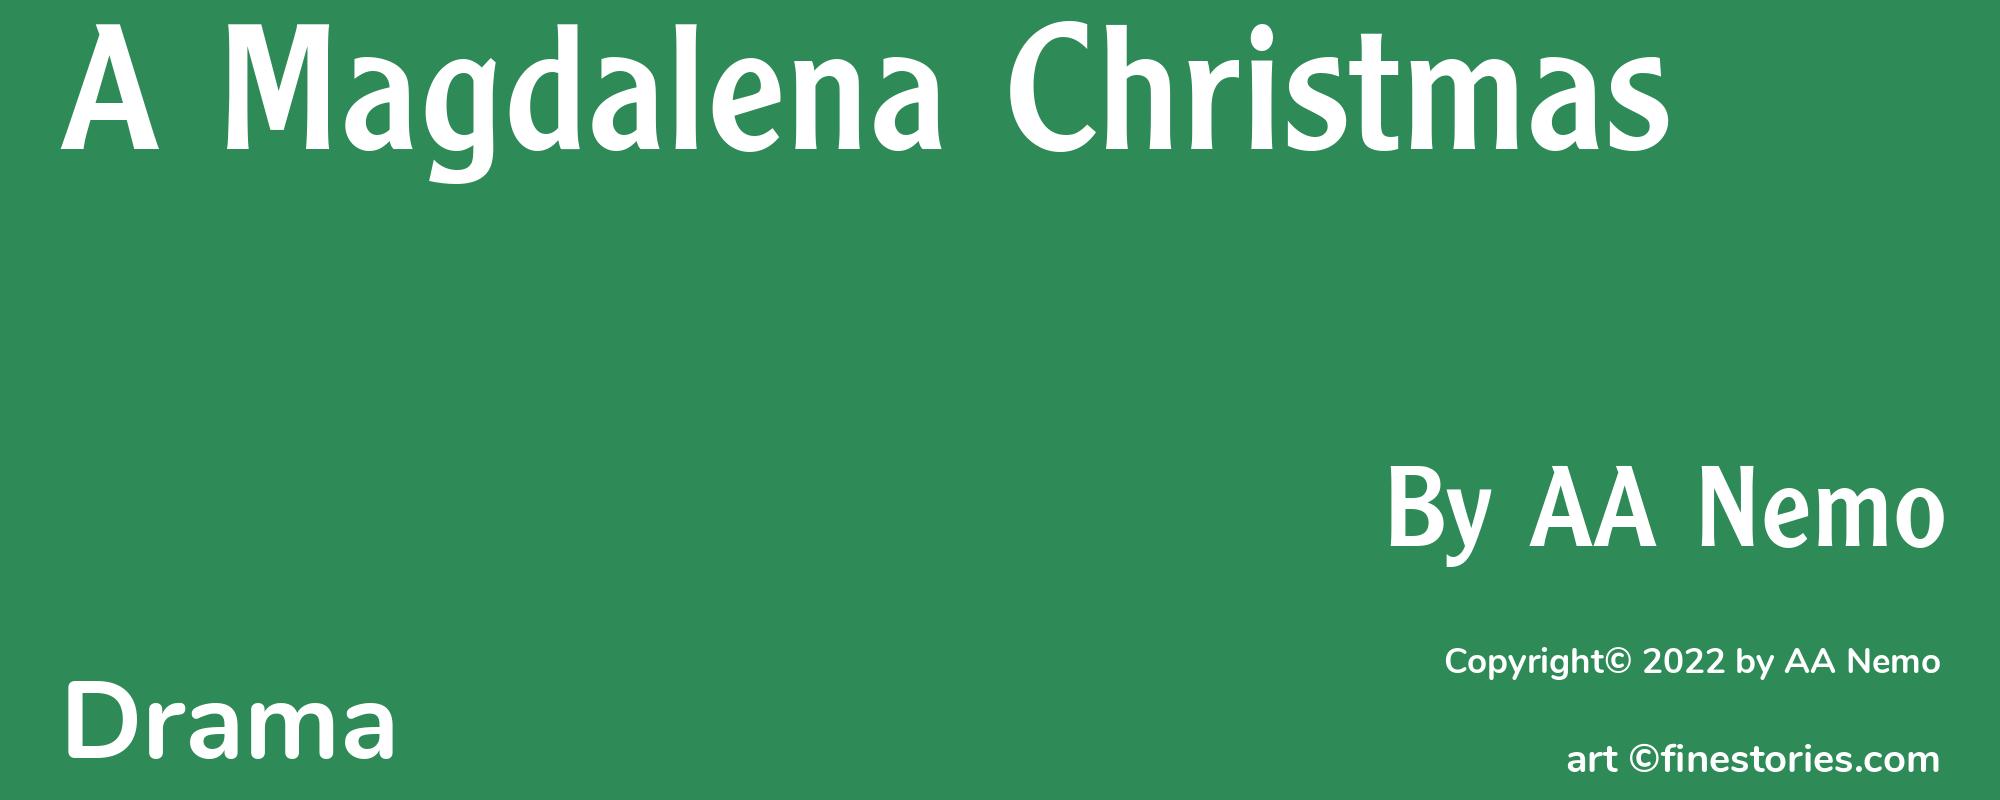 A Magdalena Christmas - Cover